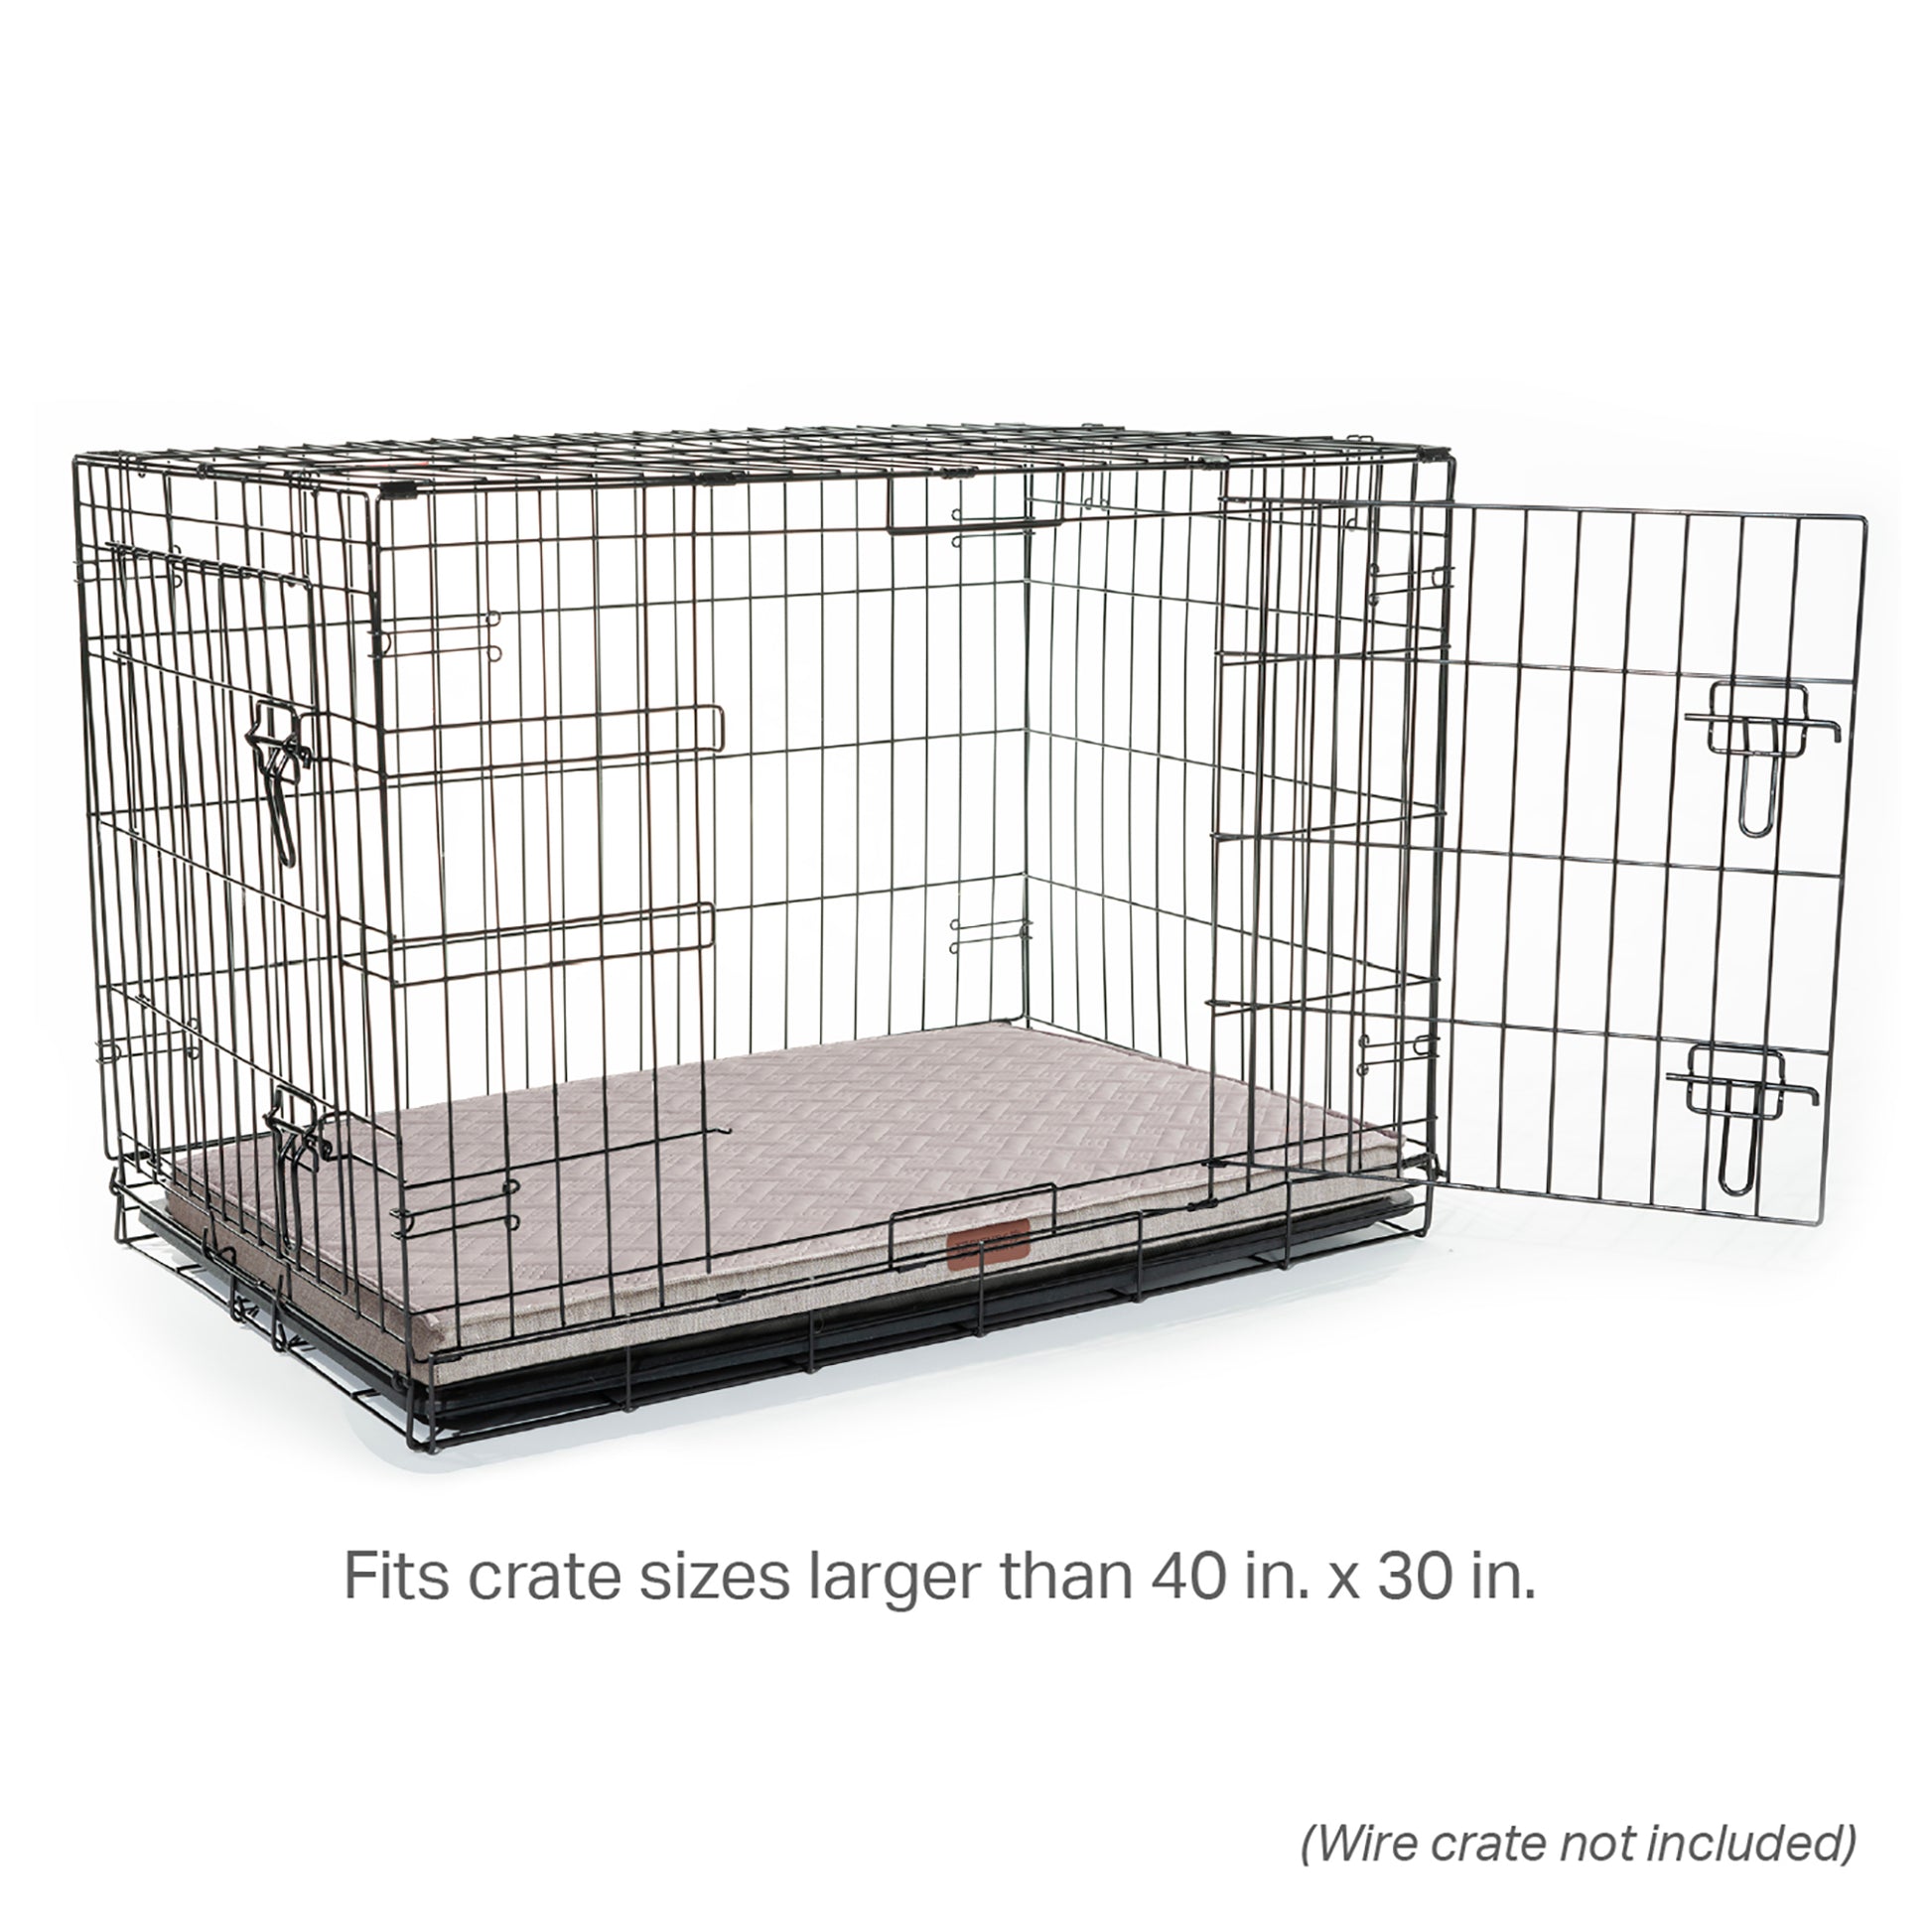 Orthopedic Dog Bed | Egg Crate Foam Pet Bed Mat - Copper